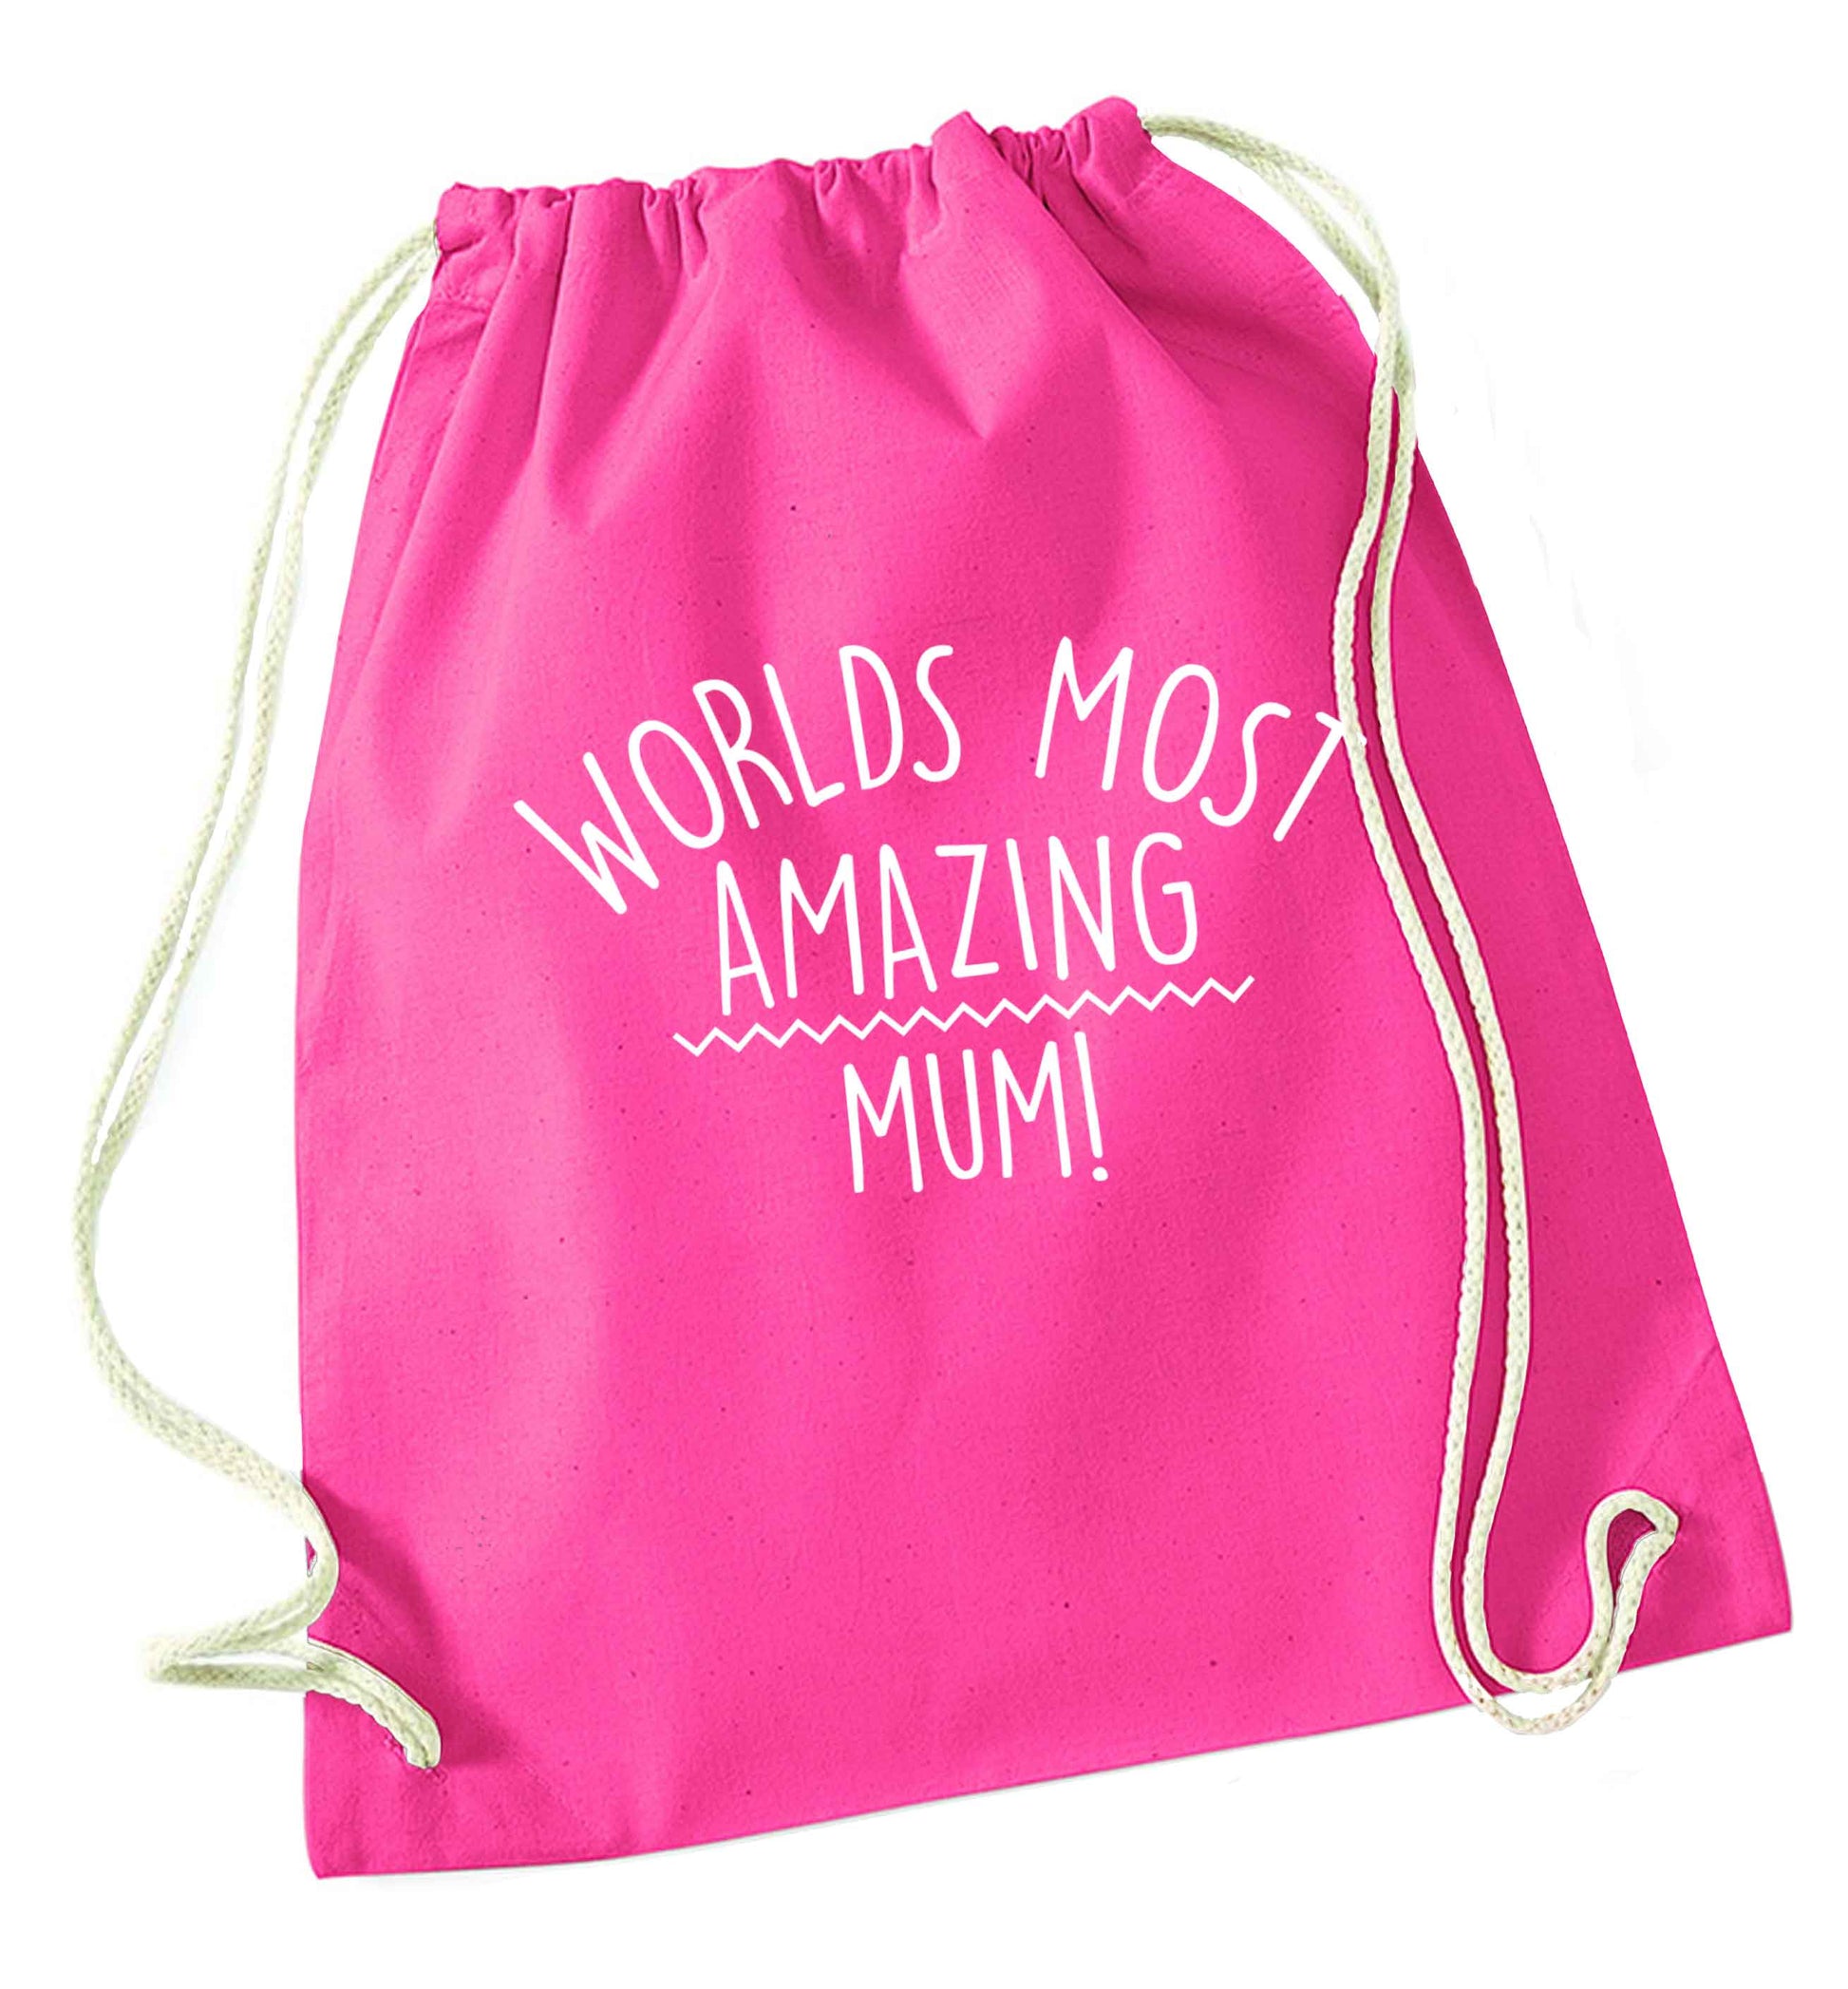 Worlds most amazing mum pink drawstring bag